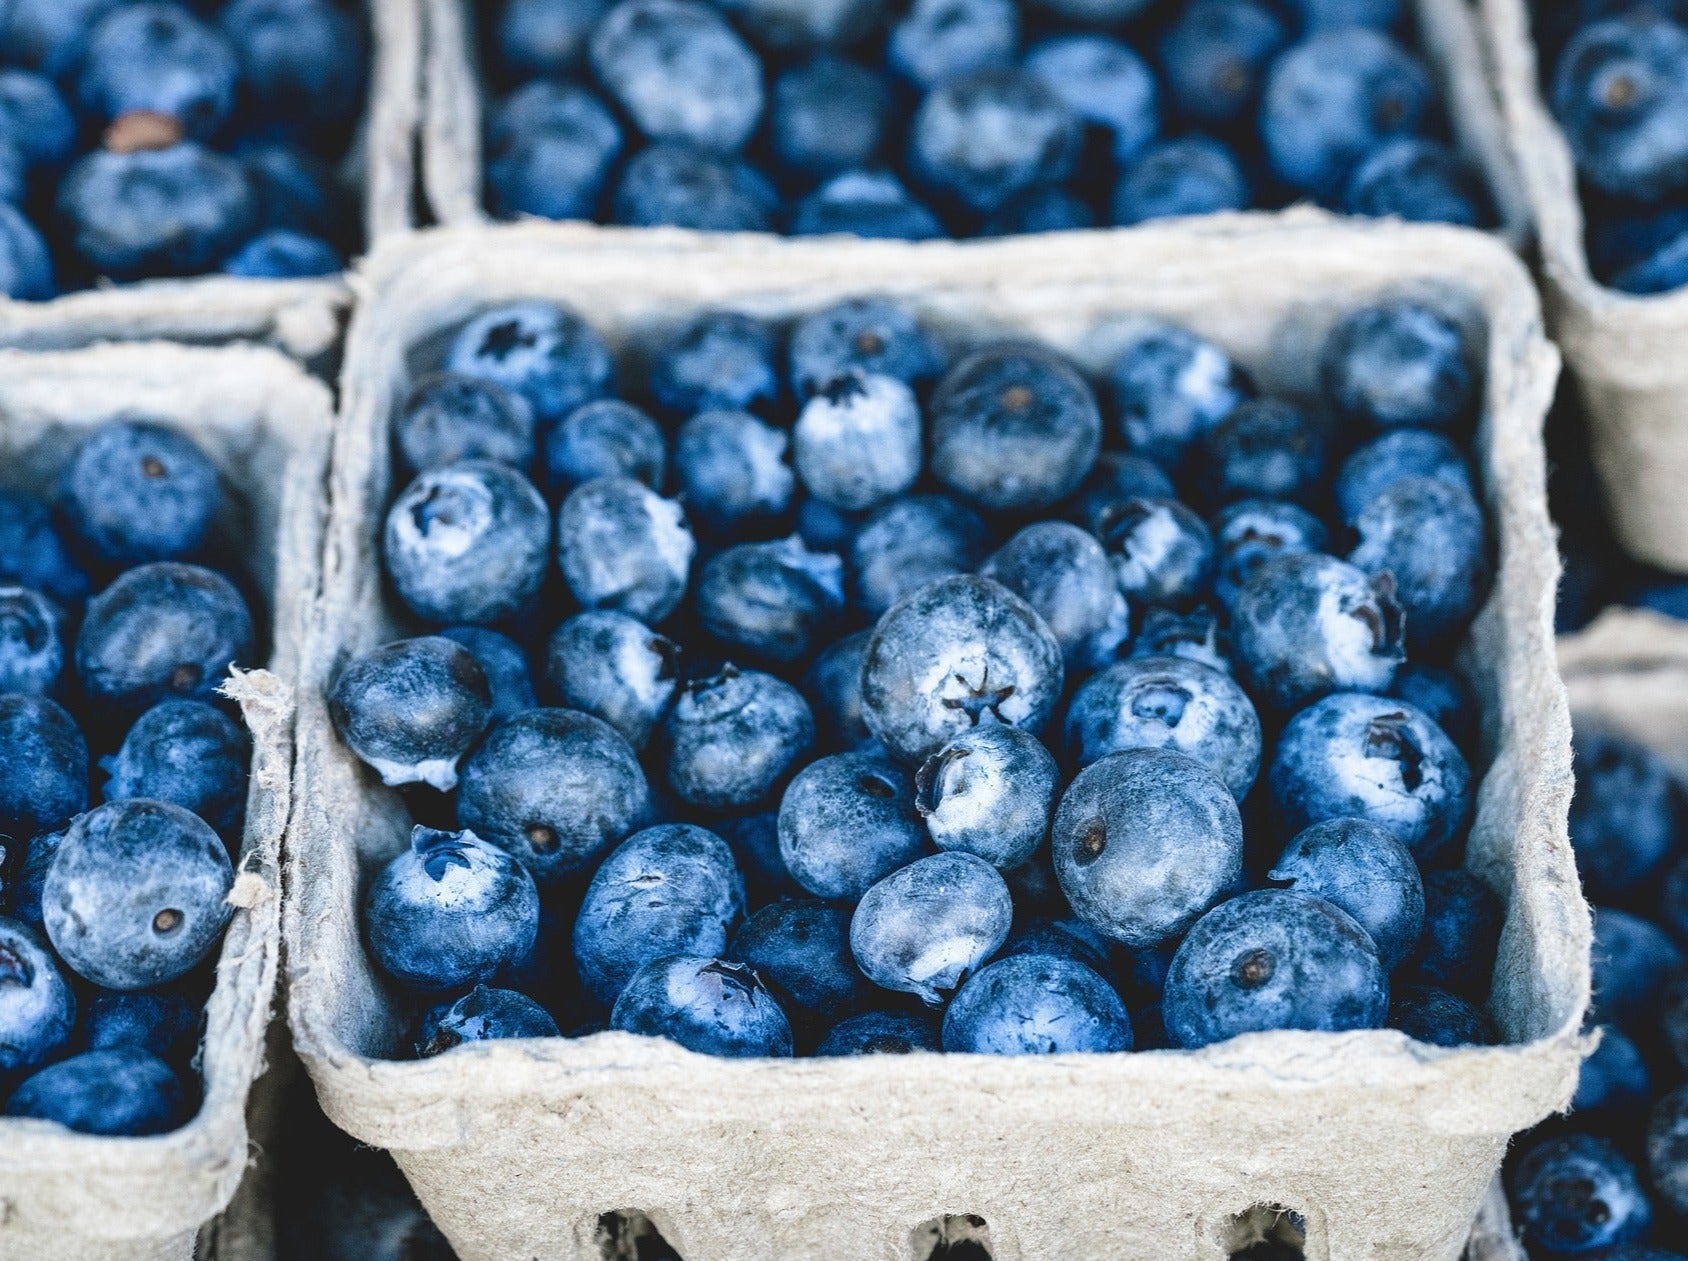 SHARING NZ Organic Blueberries from last week